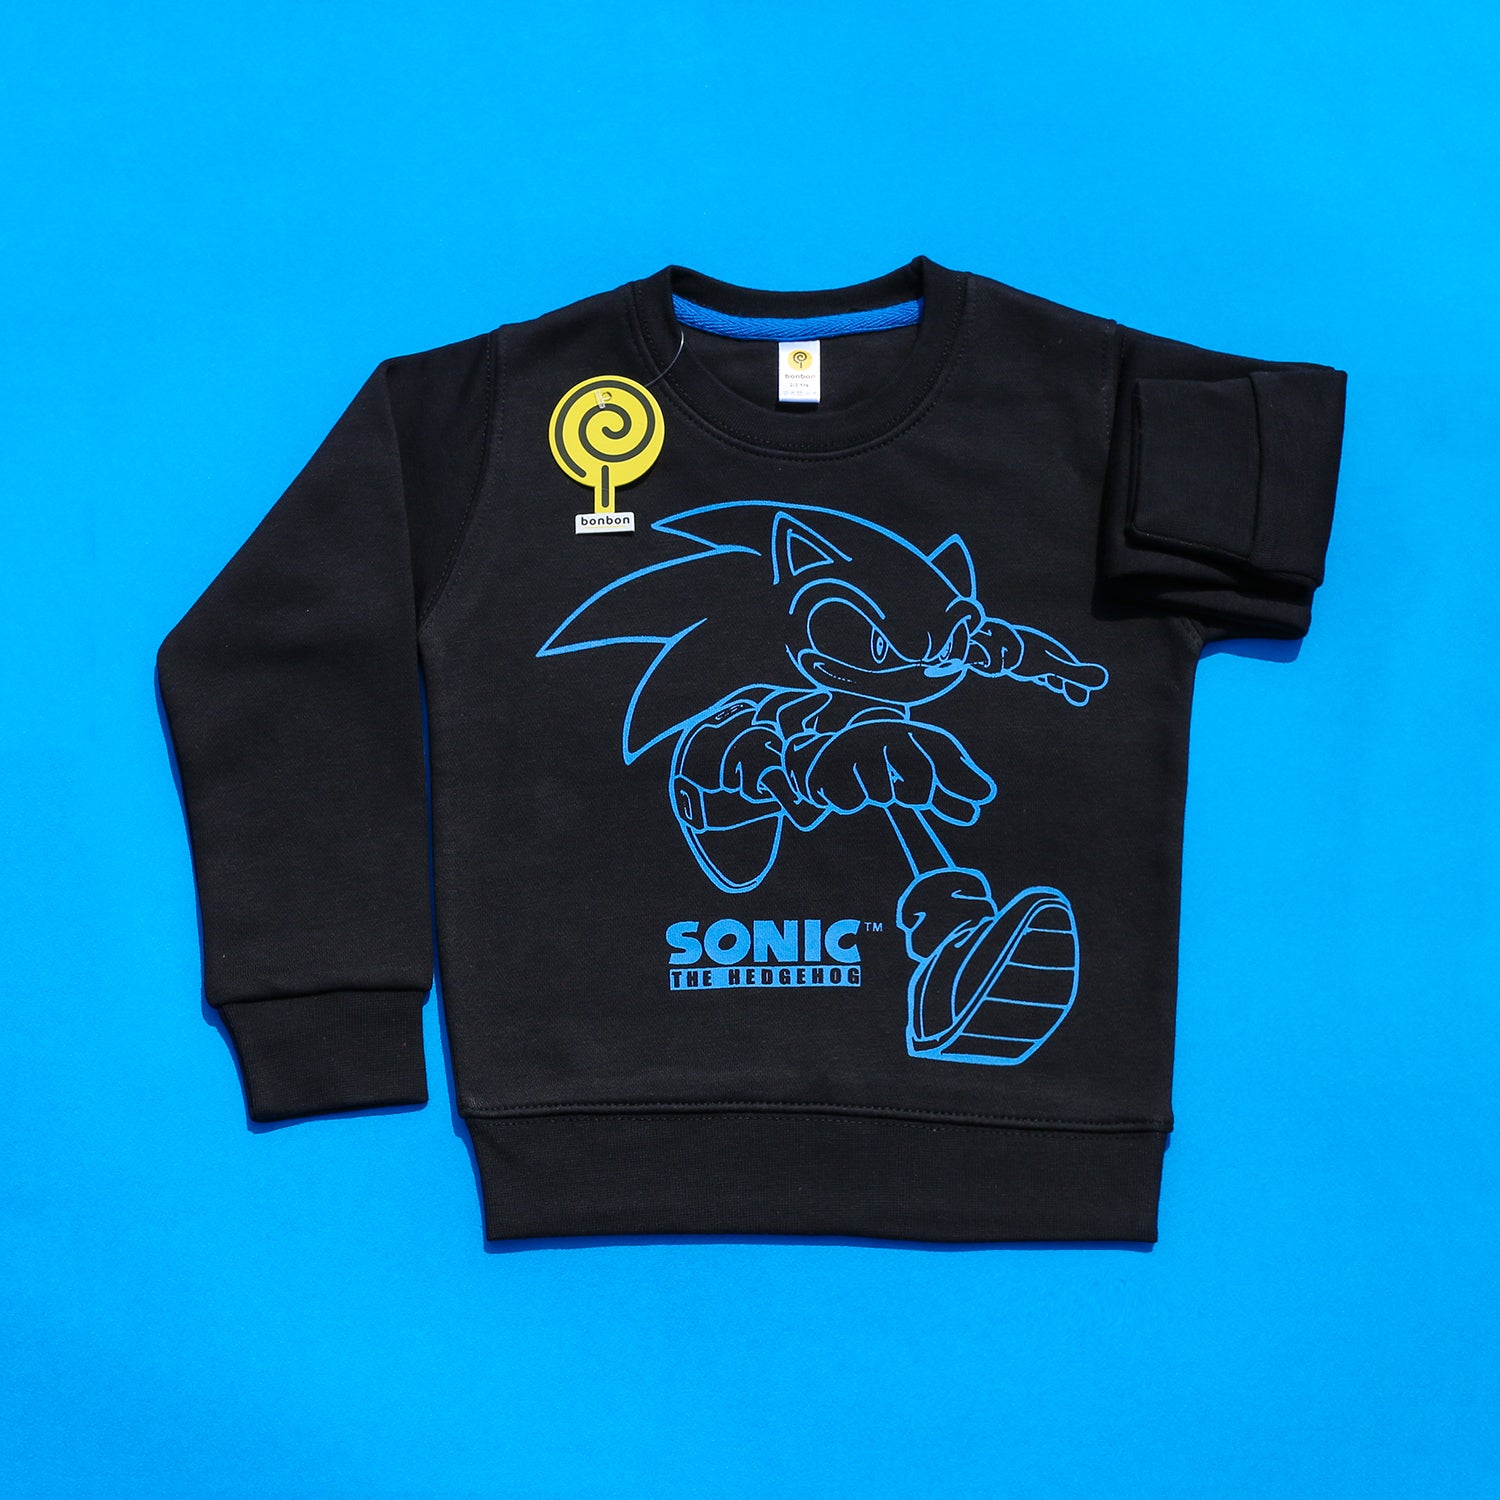 The Hedgehog Black Sweatshirt